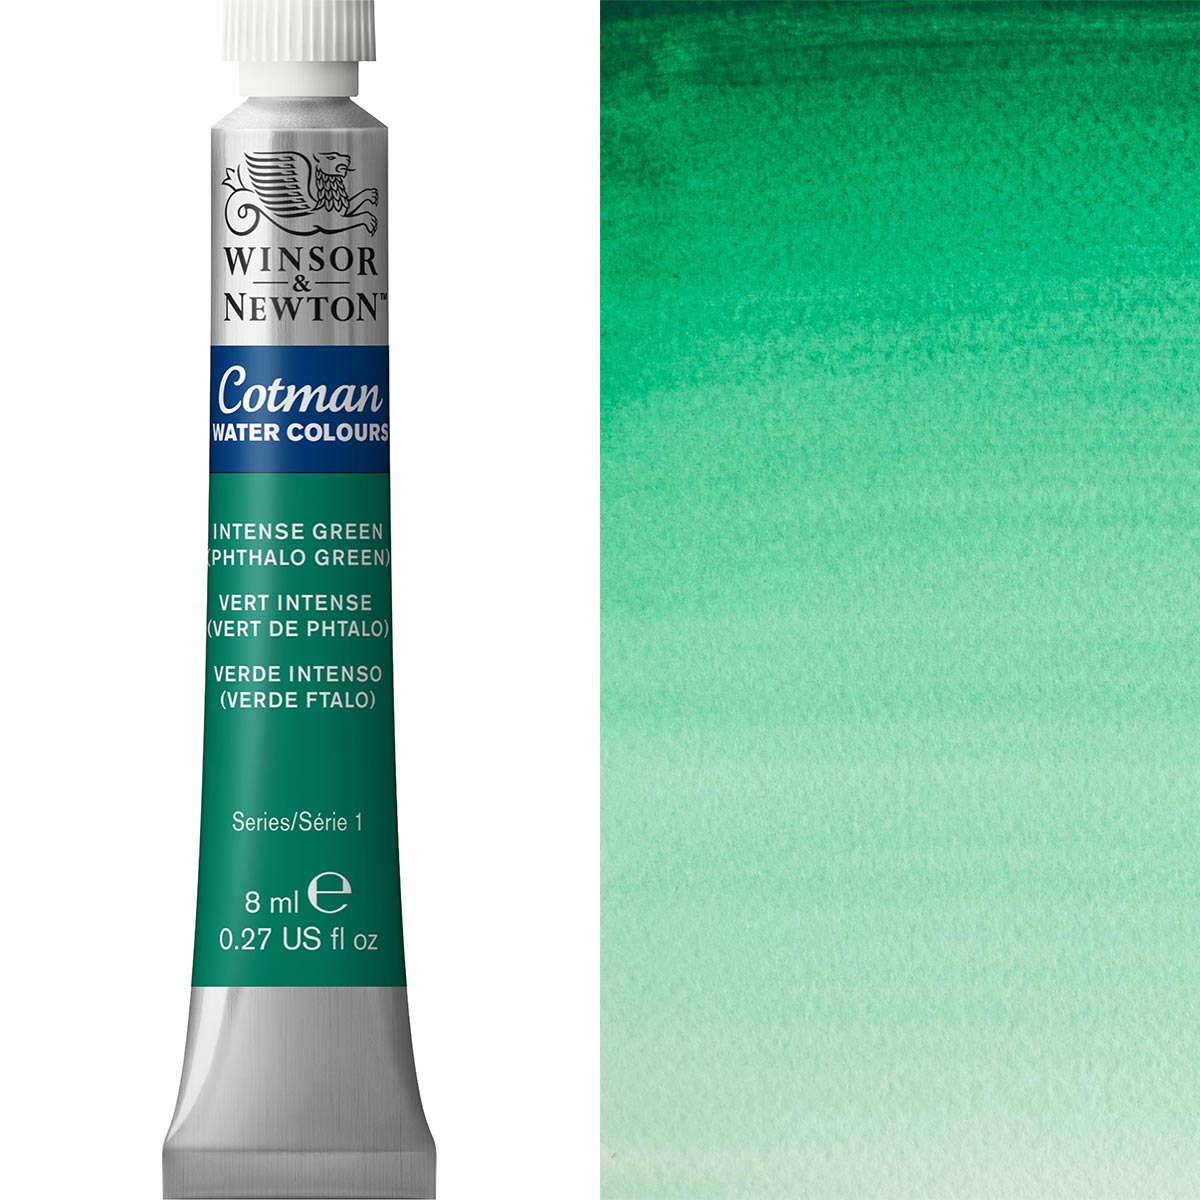 Winsor et Newton - Cotman Watercolor - 8 ml - Green intense